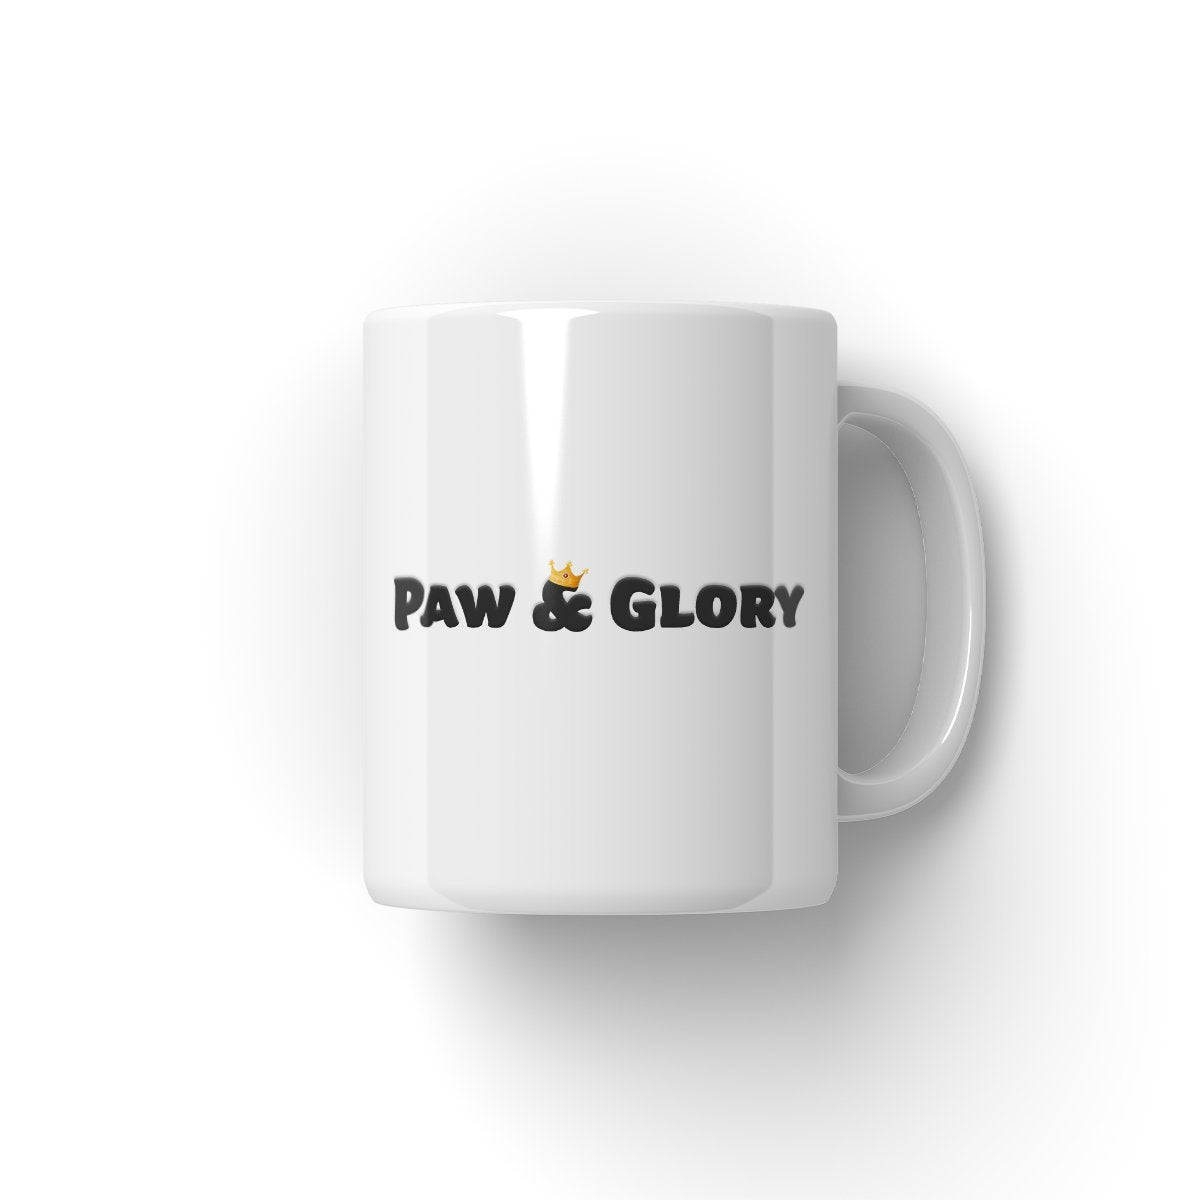 Pawyern Munich Football Club Paw & Glory, paw and glory, personalised dog mug uk, coffee mug with dog picture, puppy mug, custom dog face mug, coffee mug with dogs, personalised dog mug uk, Pet Portraits Mug